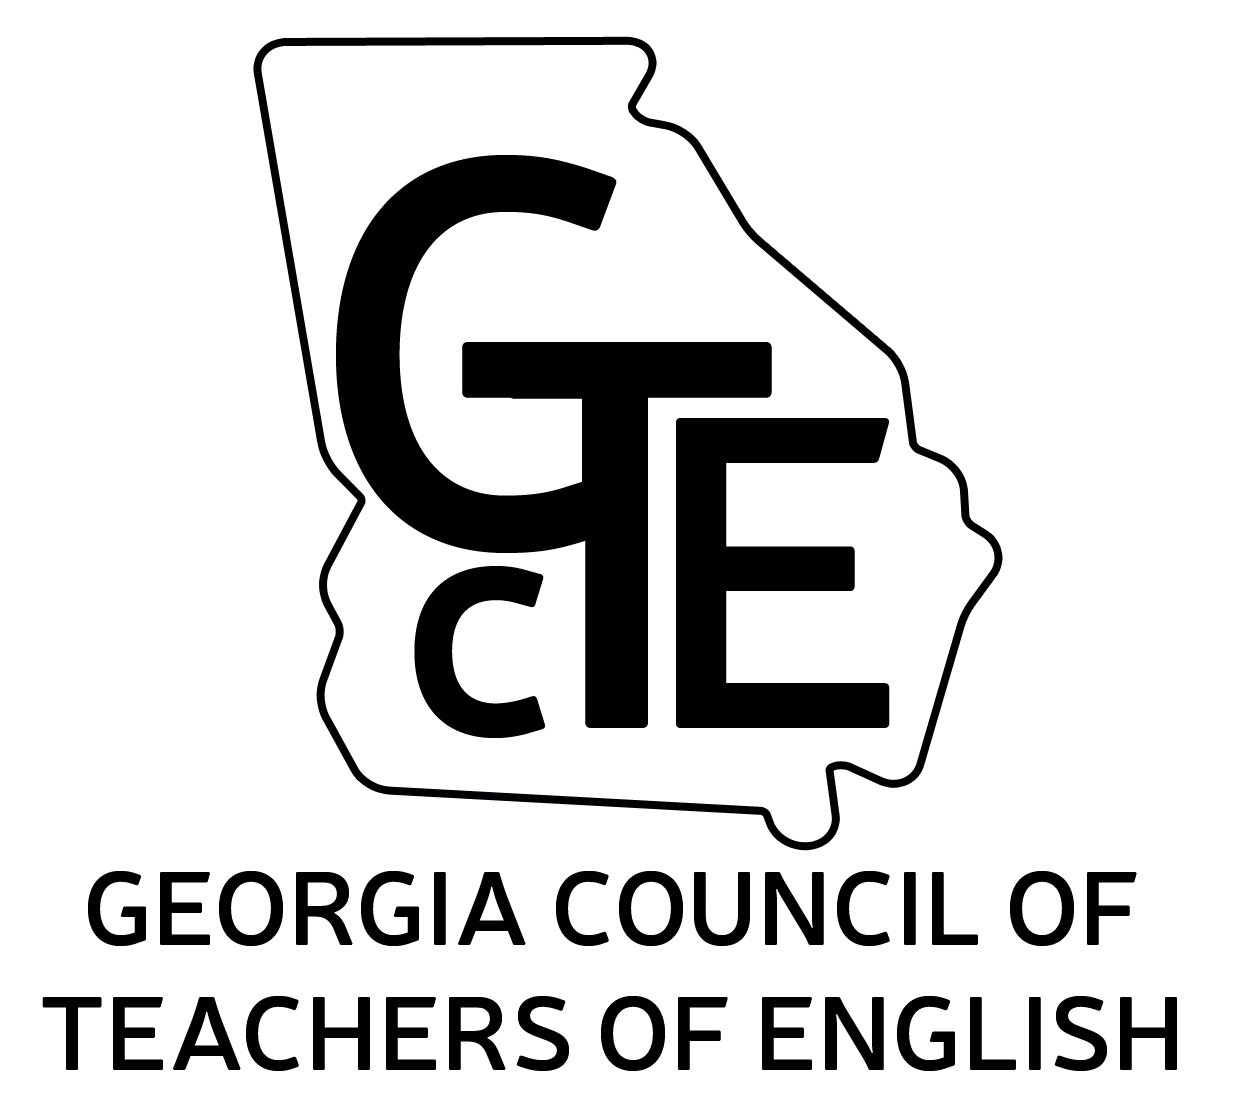 georgia council of teachers of english